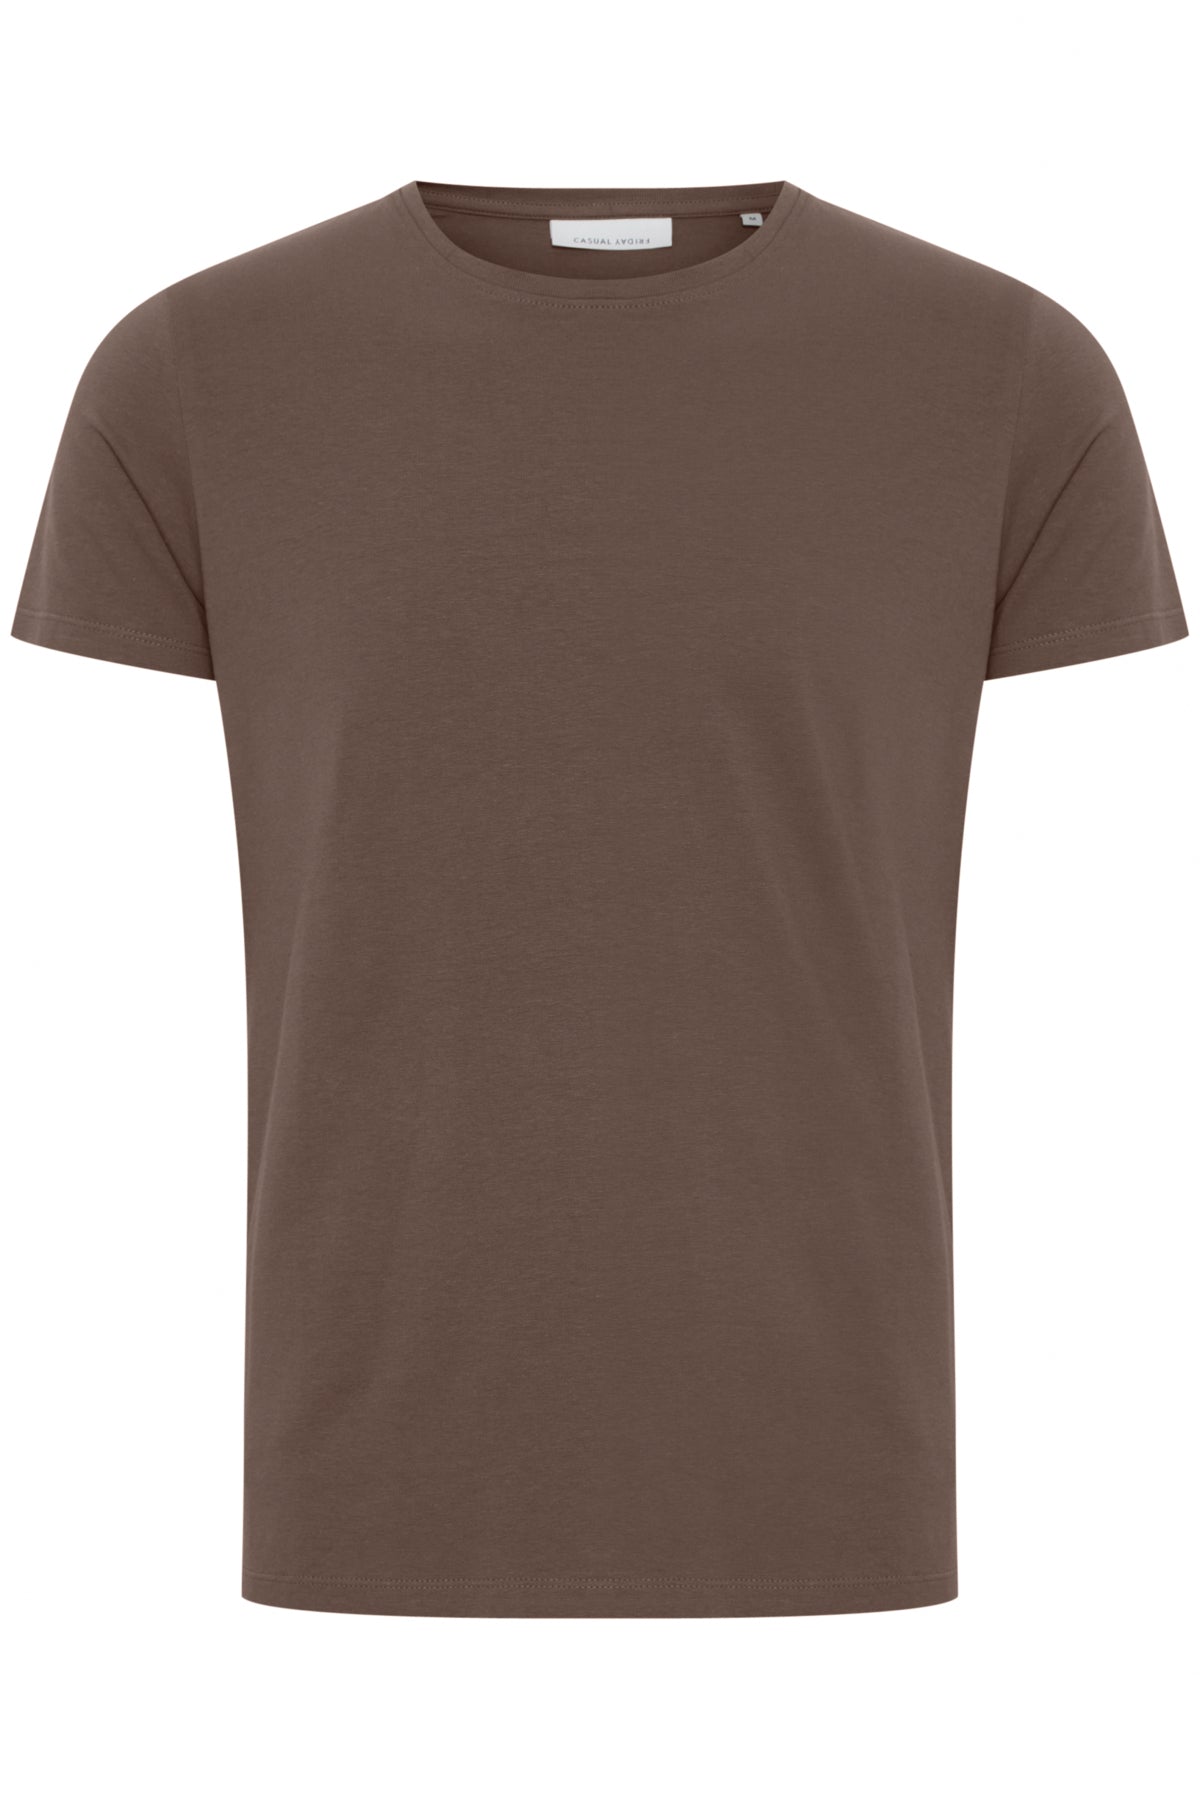 David Crew Neck T-shirt - Major Brown - The Sons online